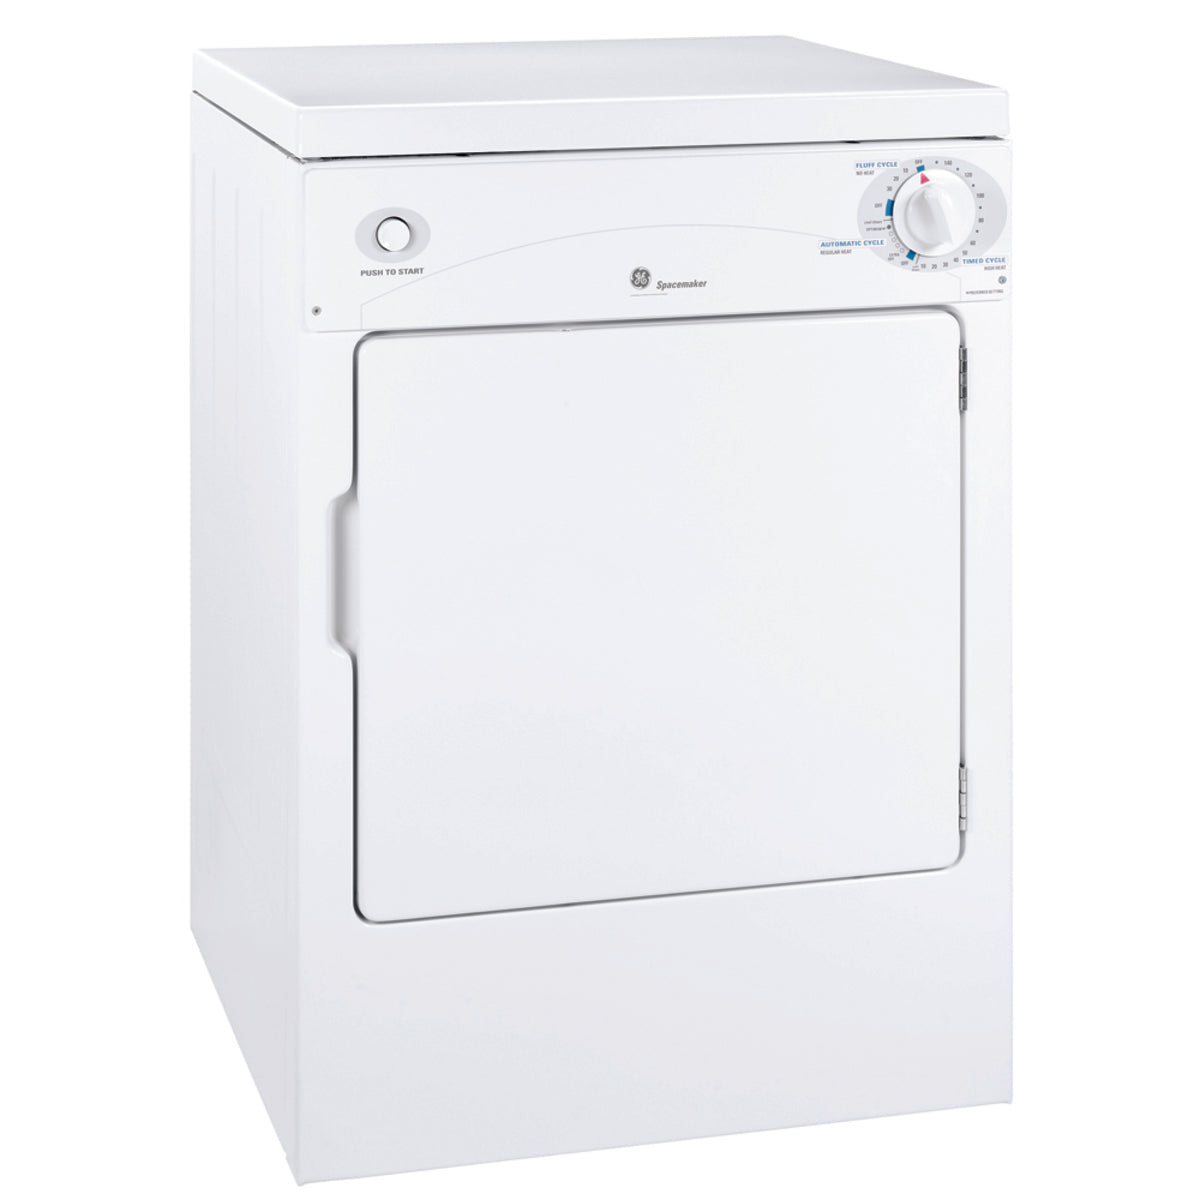 GE - 3.6 cu. Ft  Electric Dryer in White - PSKP333EBWW